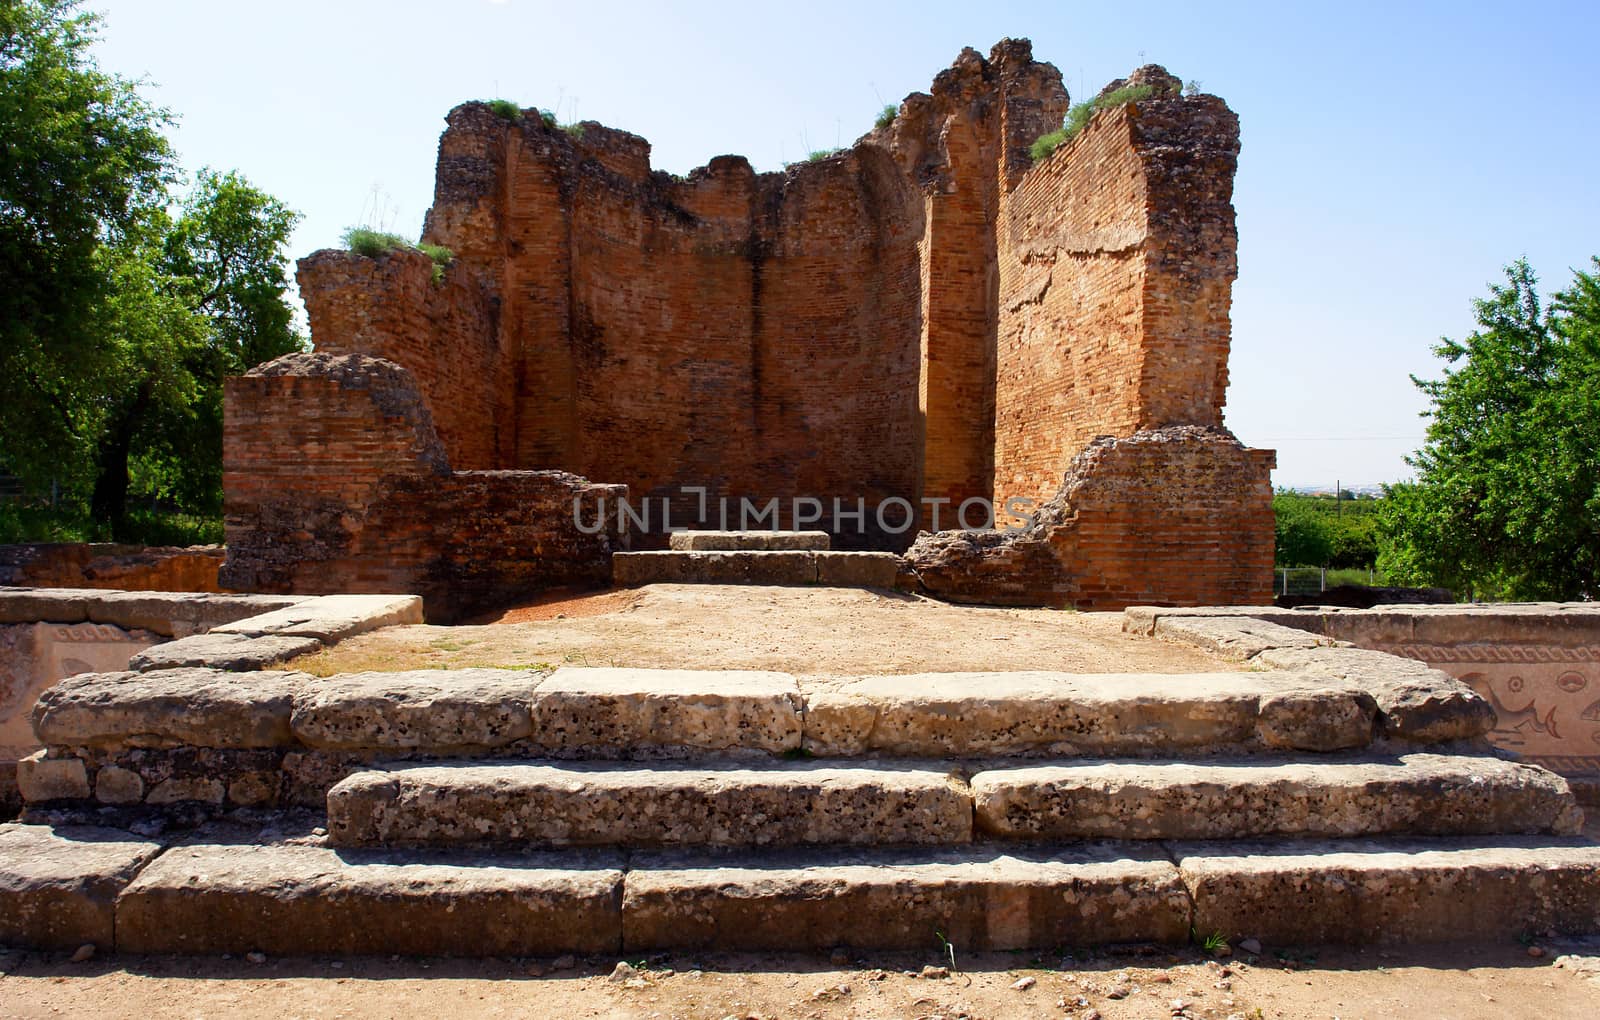 Roman temple ruins of "Milreu" in Estoi, Algarve, Portugal